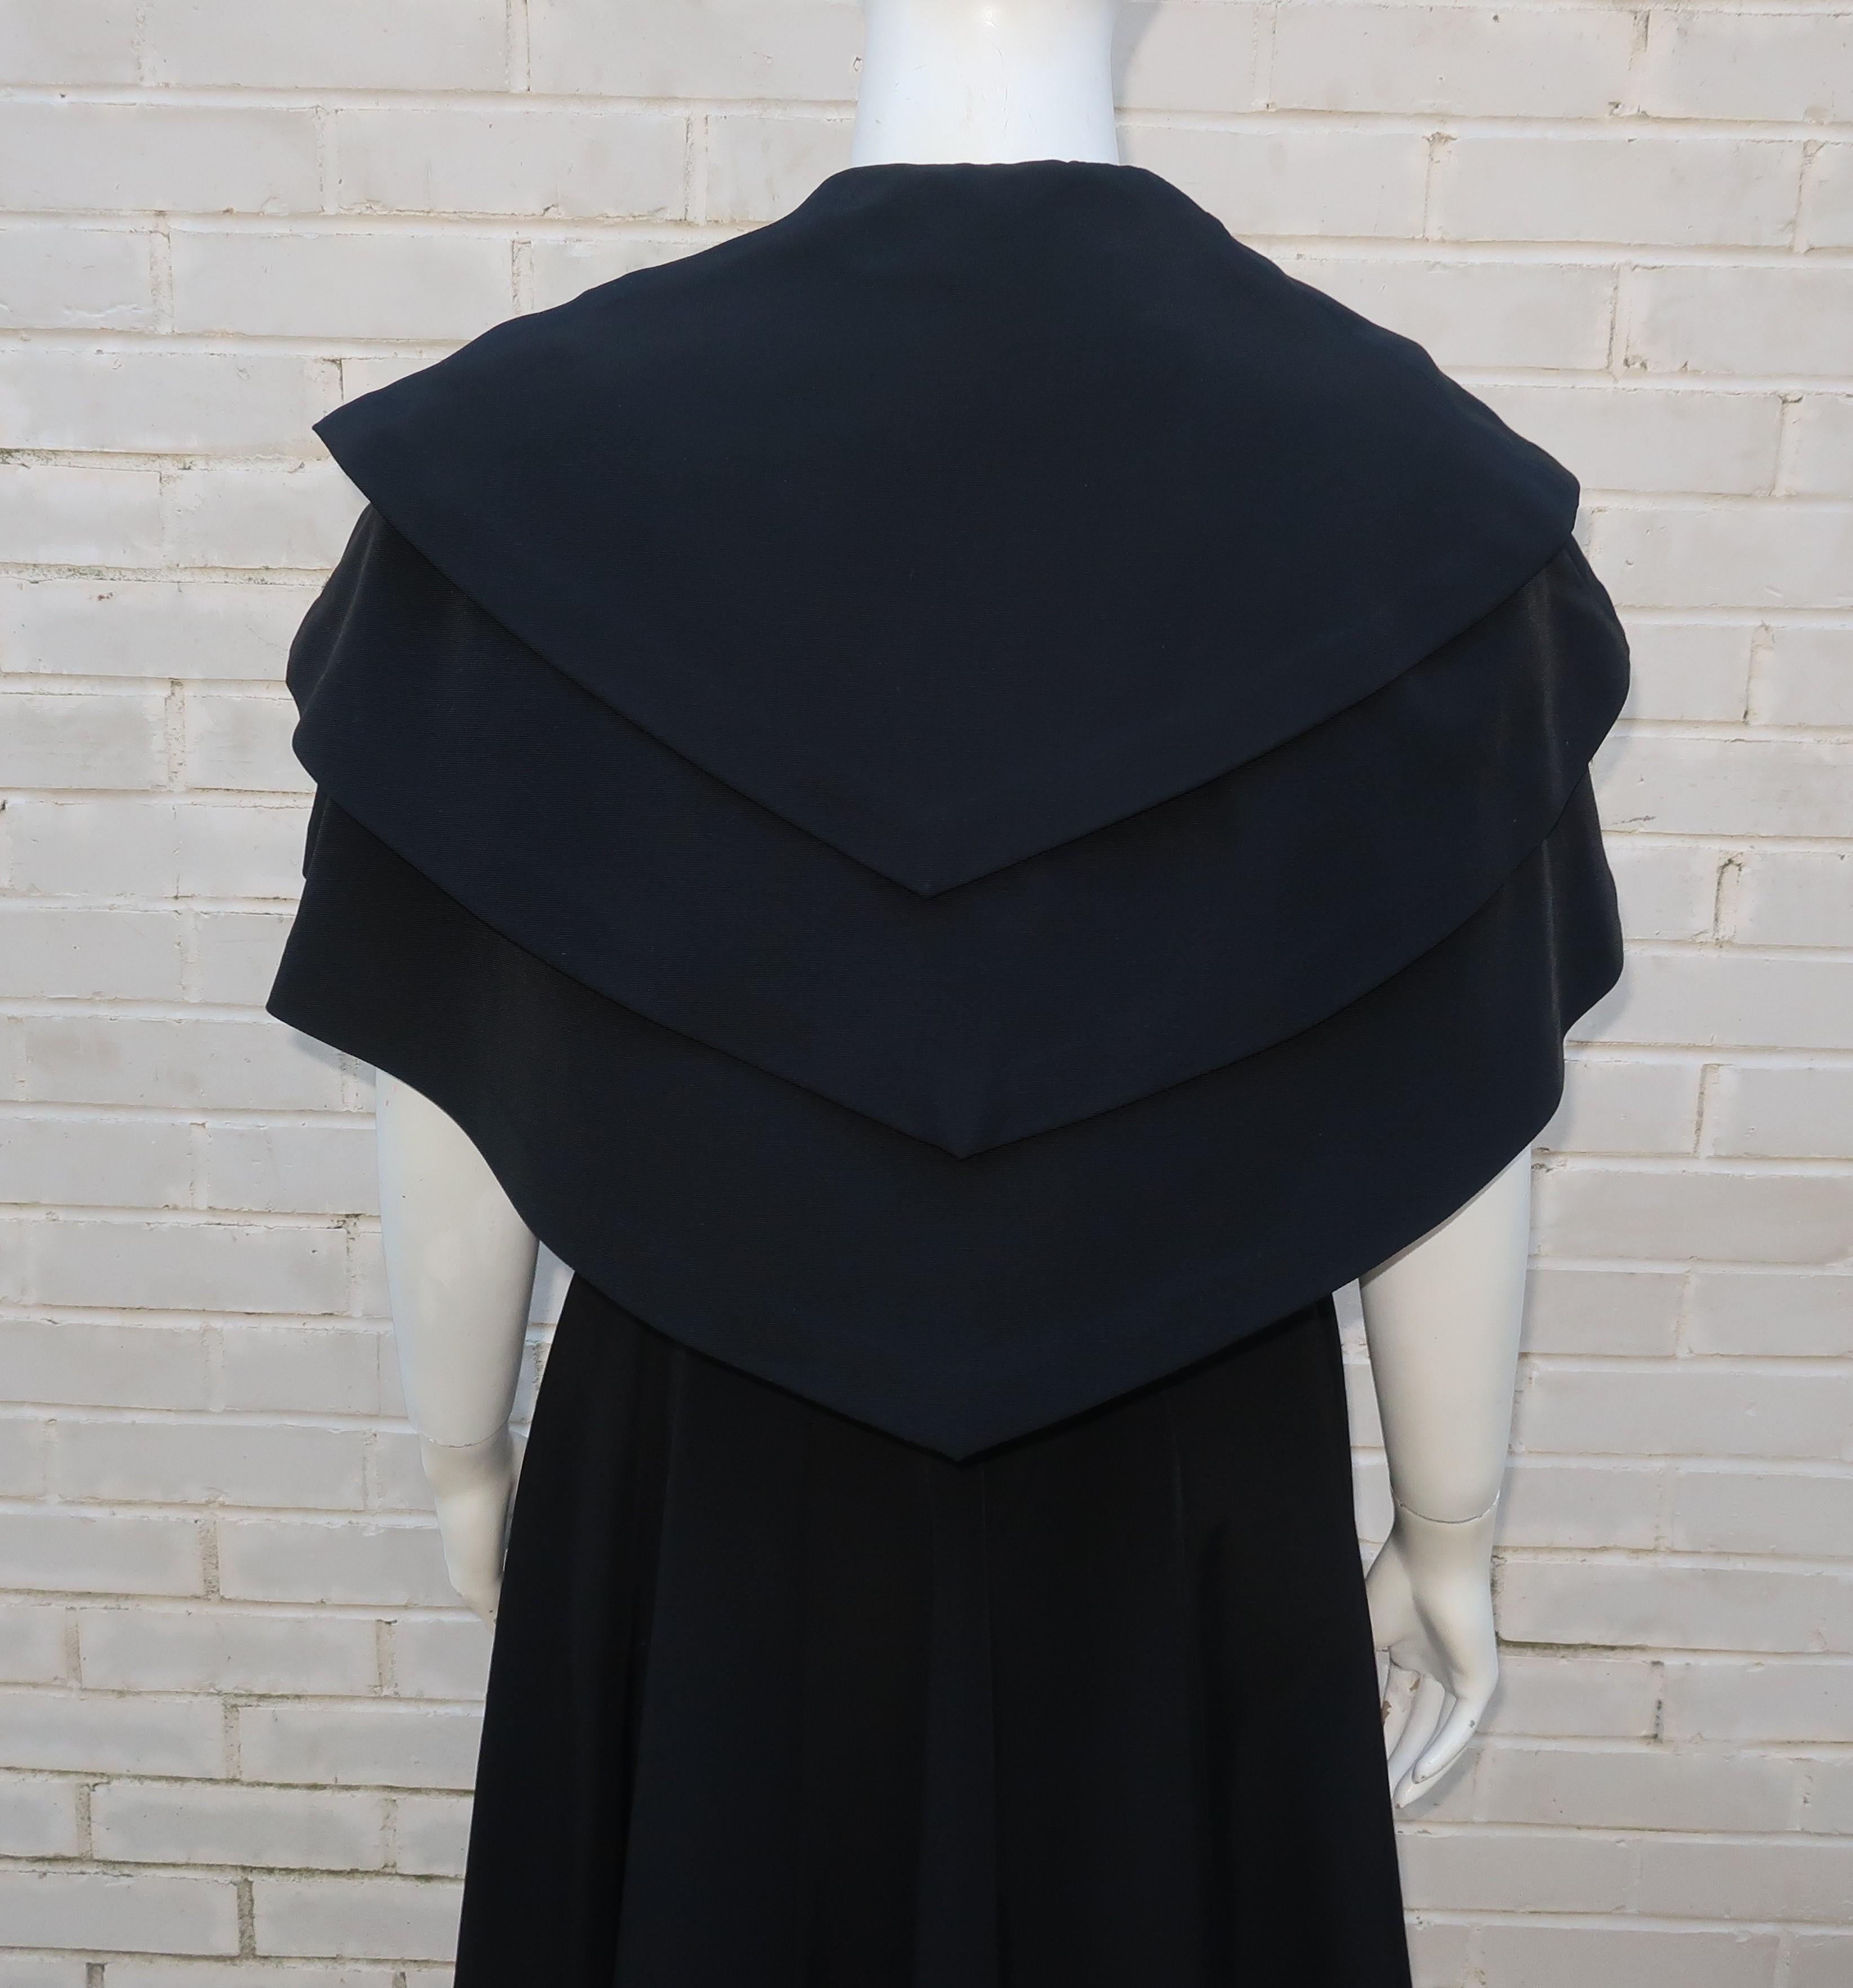 Bonwit Teller 'New Look' Black Silk Faille Evening Coat Dress, C.1950 3